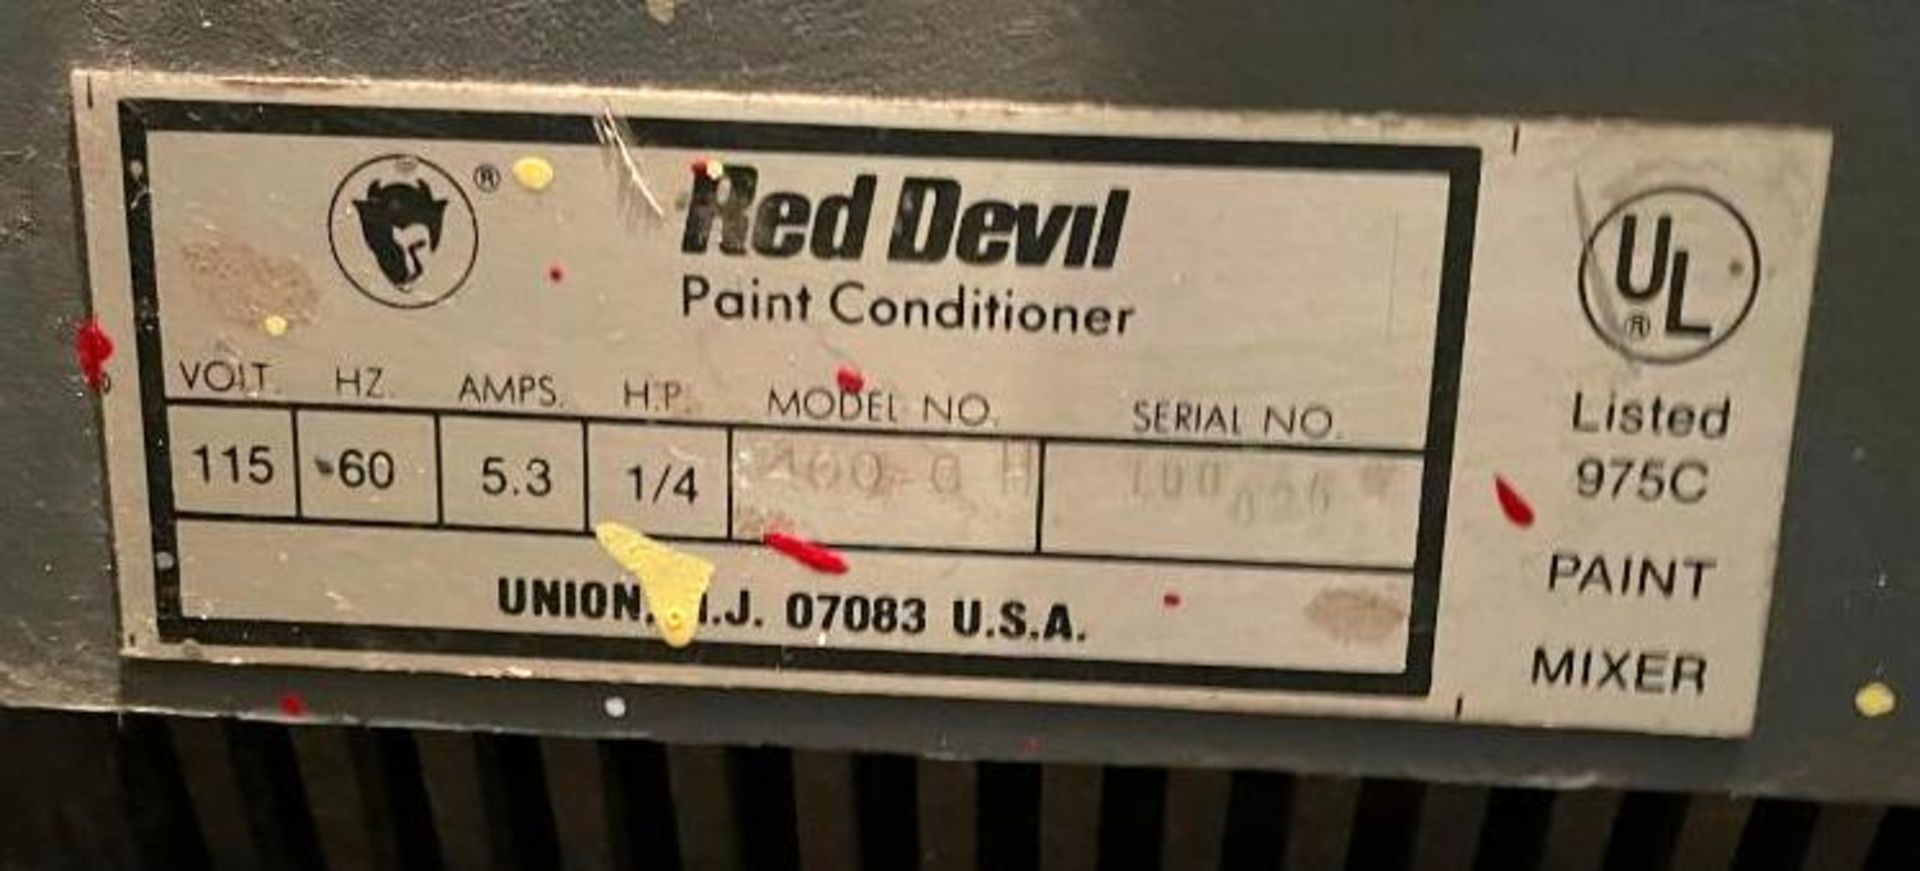 RED DEVIL 5400 TWIN-ARM PAINT SHAKER/ MIXER BRAND/MODEL: RED DEVIL 5400 INFORMATION: 115V, 60HZ, 5.3 - Image 8 of 9